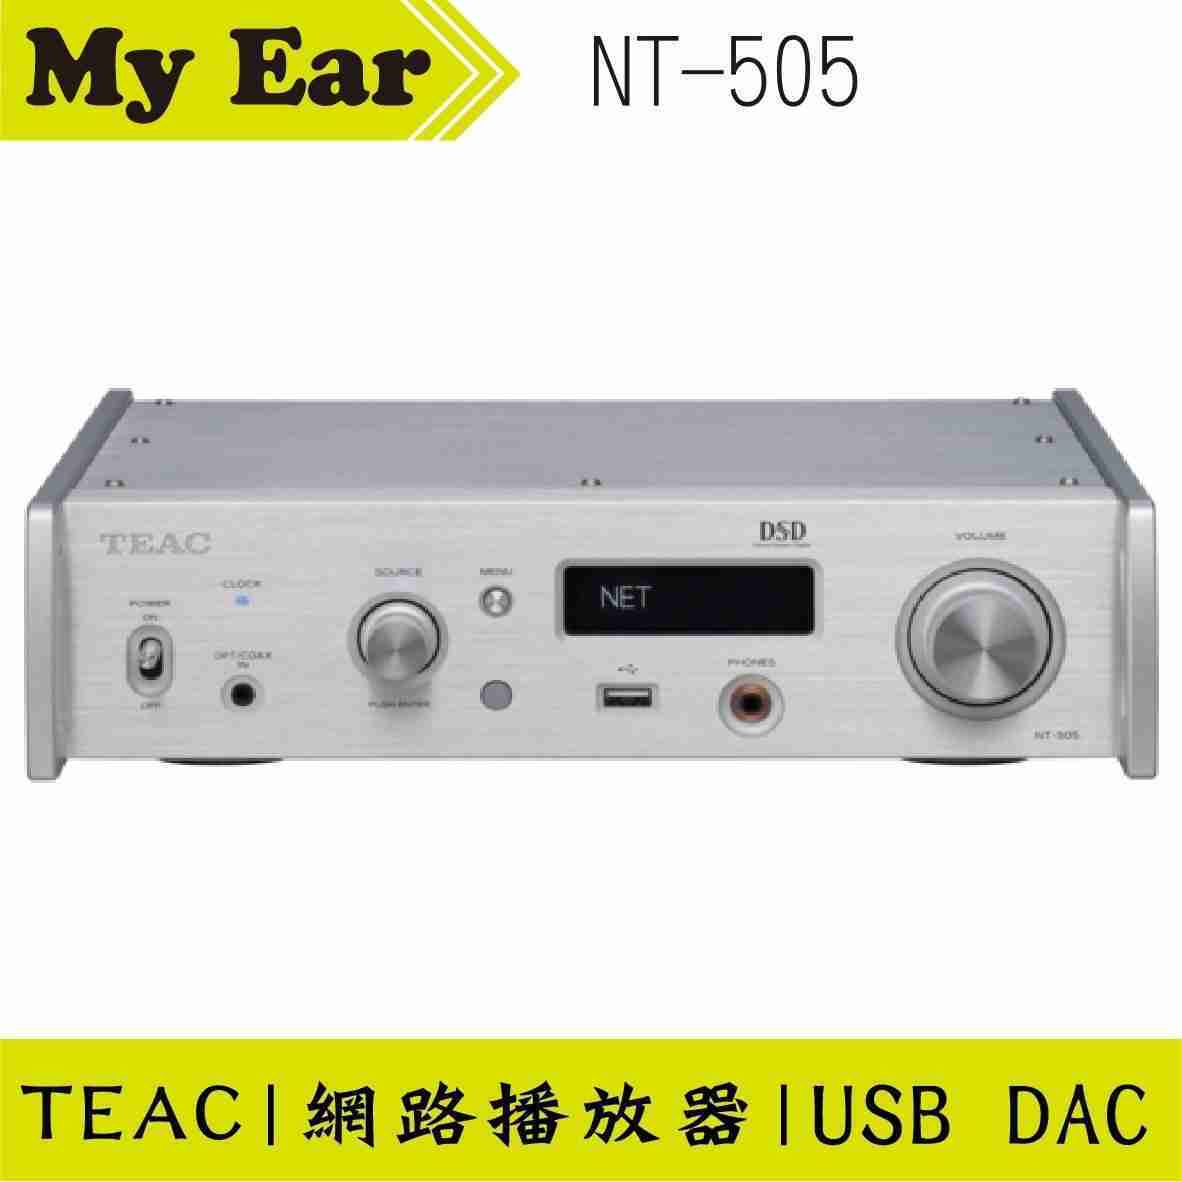 TEAC NT-505 USB DAC 網路串流播放器 銀色 | My Ear 耳機專門店